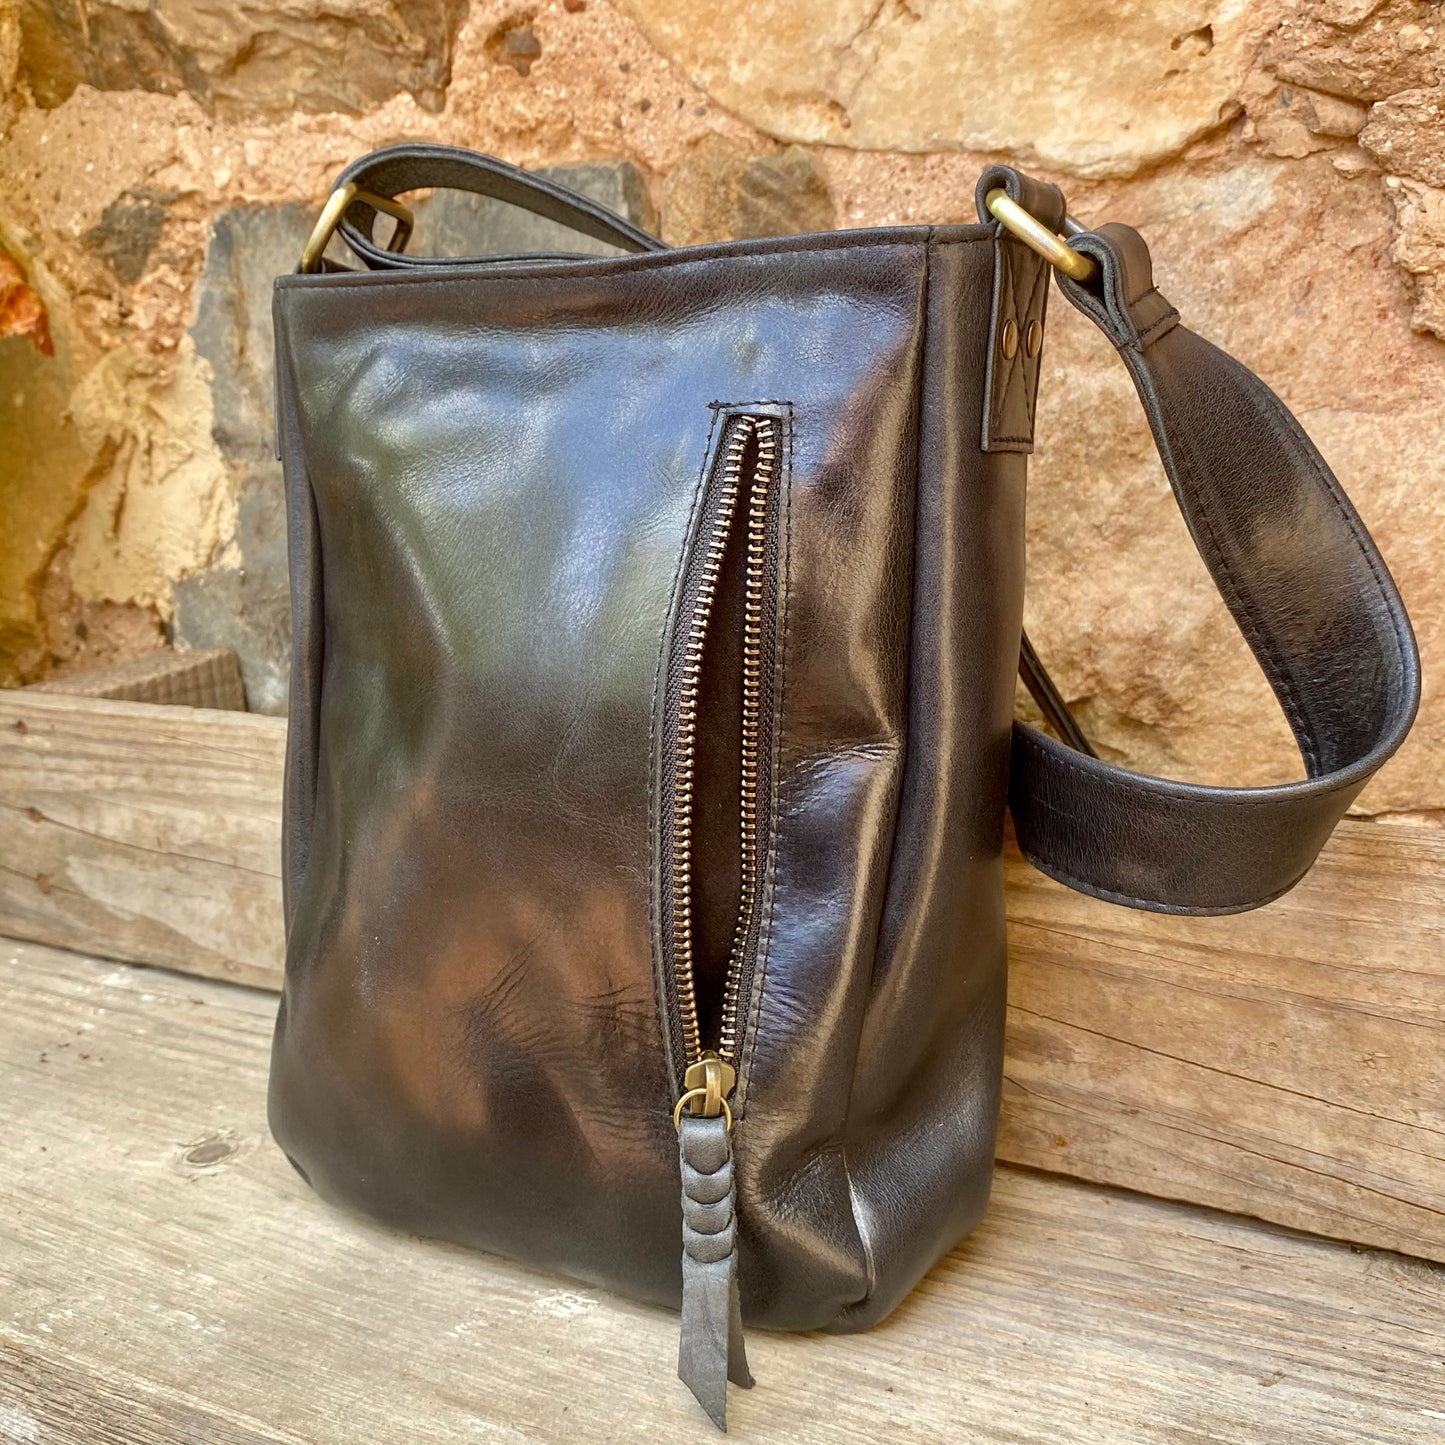 A Lean Pocket Bag